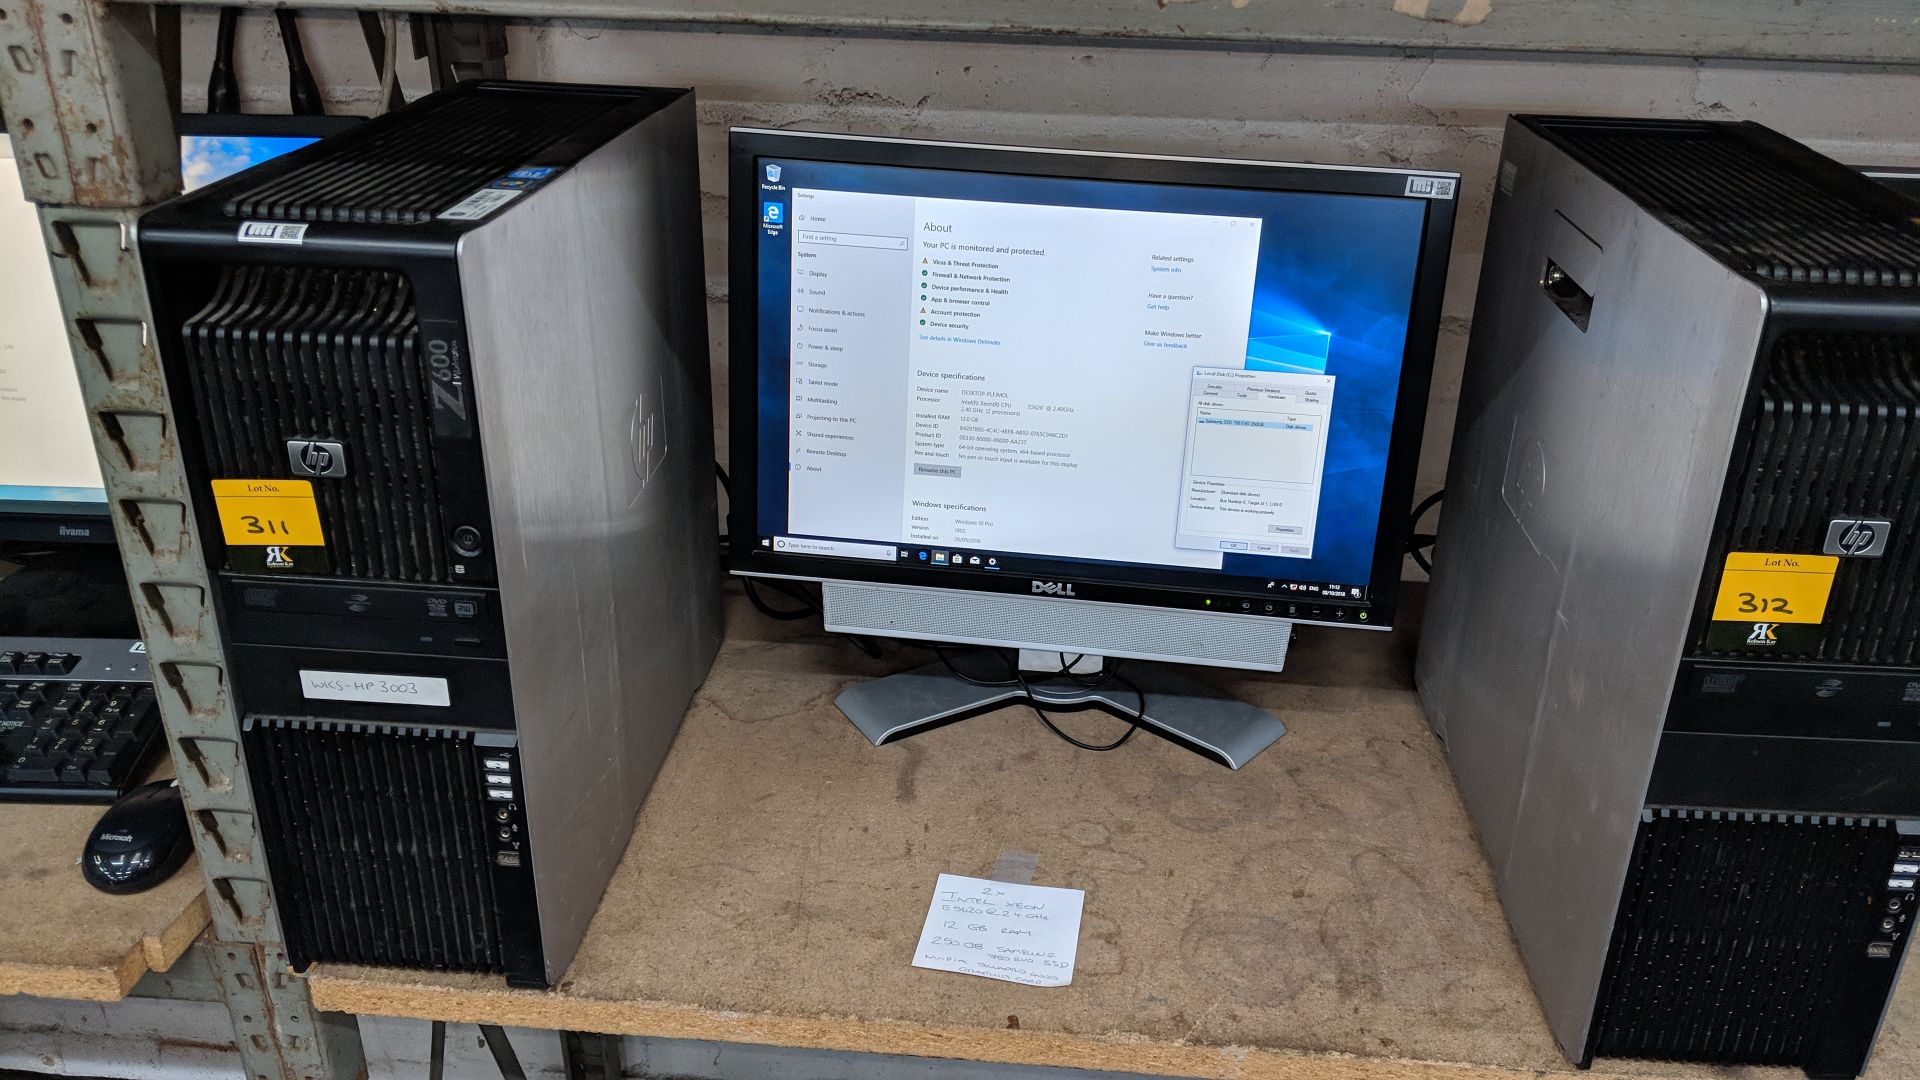 HP tower computer with twin Intel Xeon E5620 2.4GHz processors, 12Gb RAM, 250Gb Samsung 750 Evo